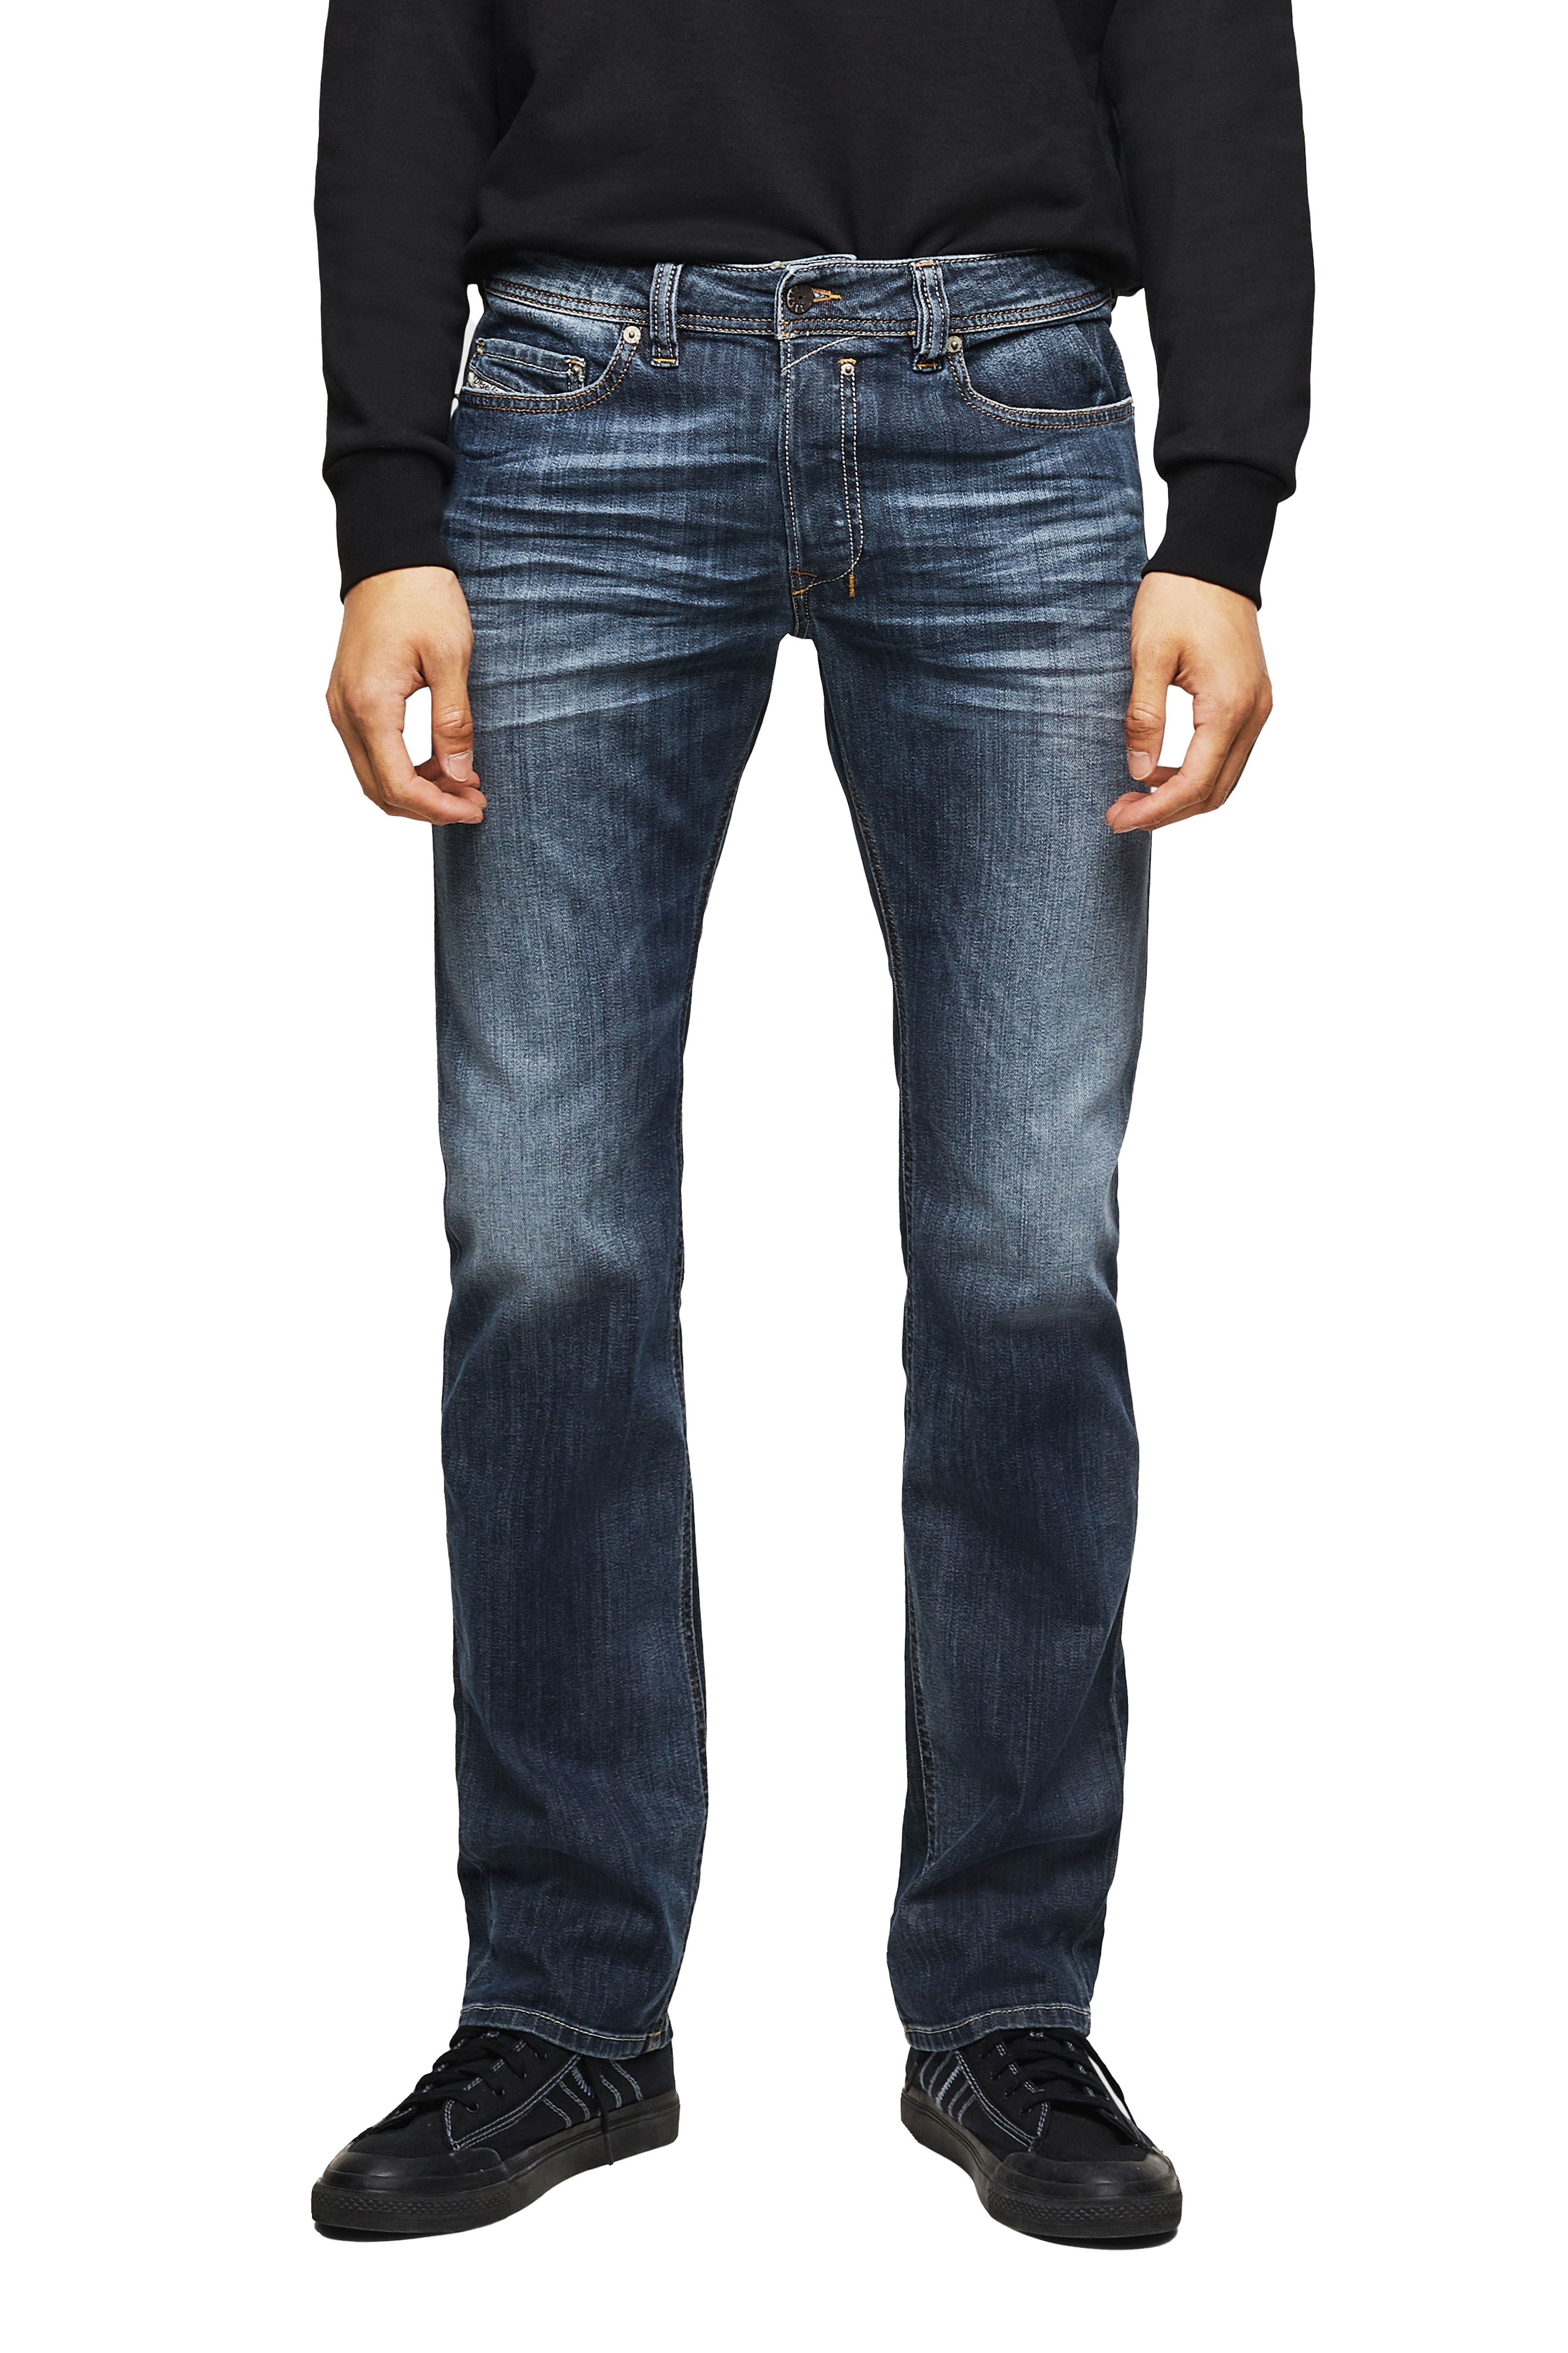 dark grey ripped jeans mens